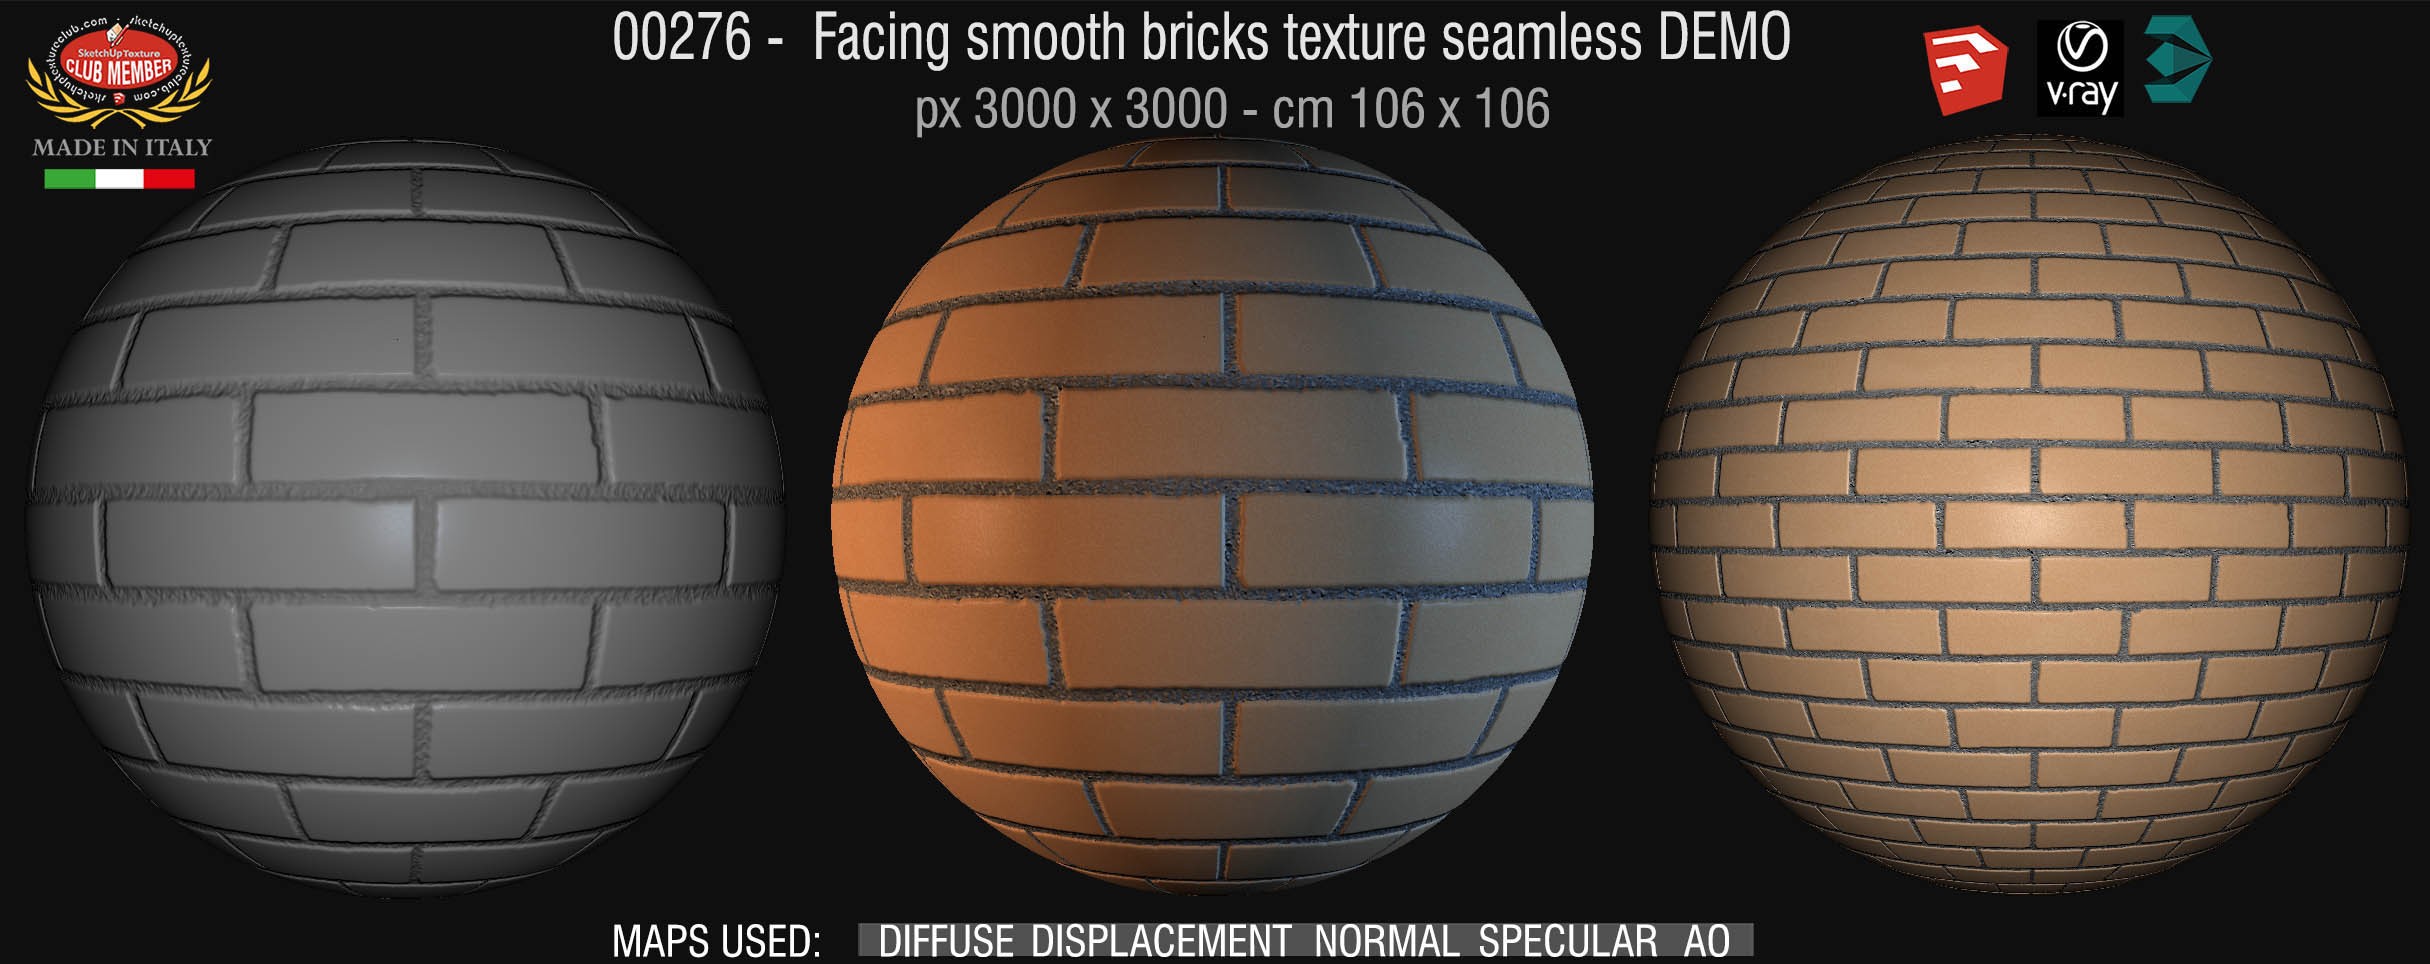 00276 Facing smooth bricks texture seamless + maps DEMO